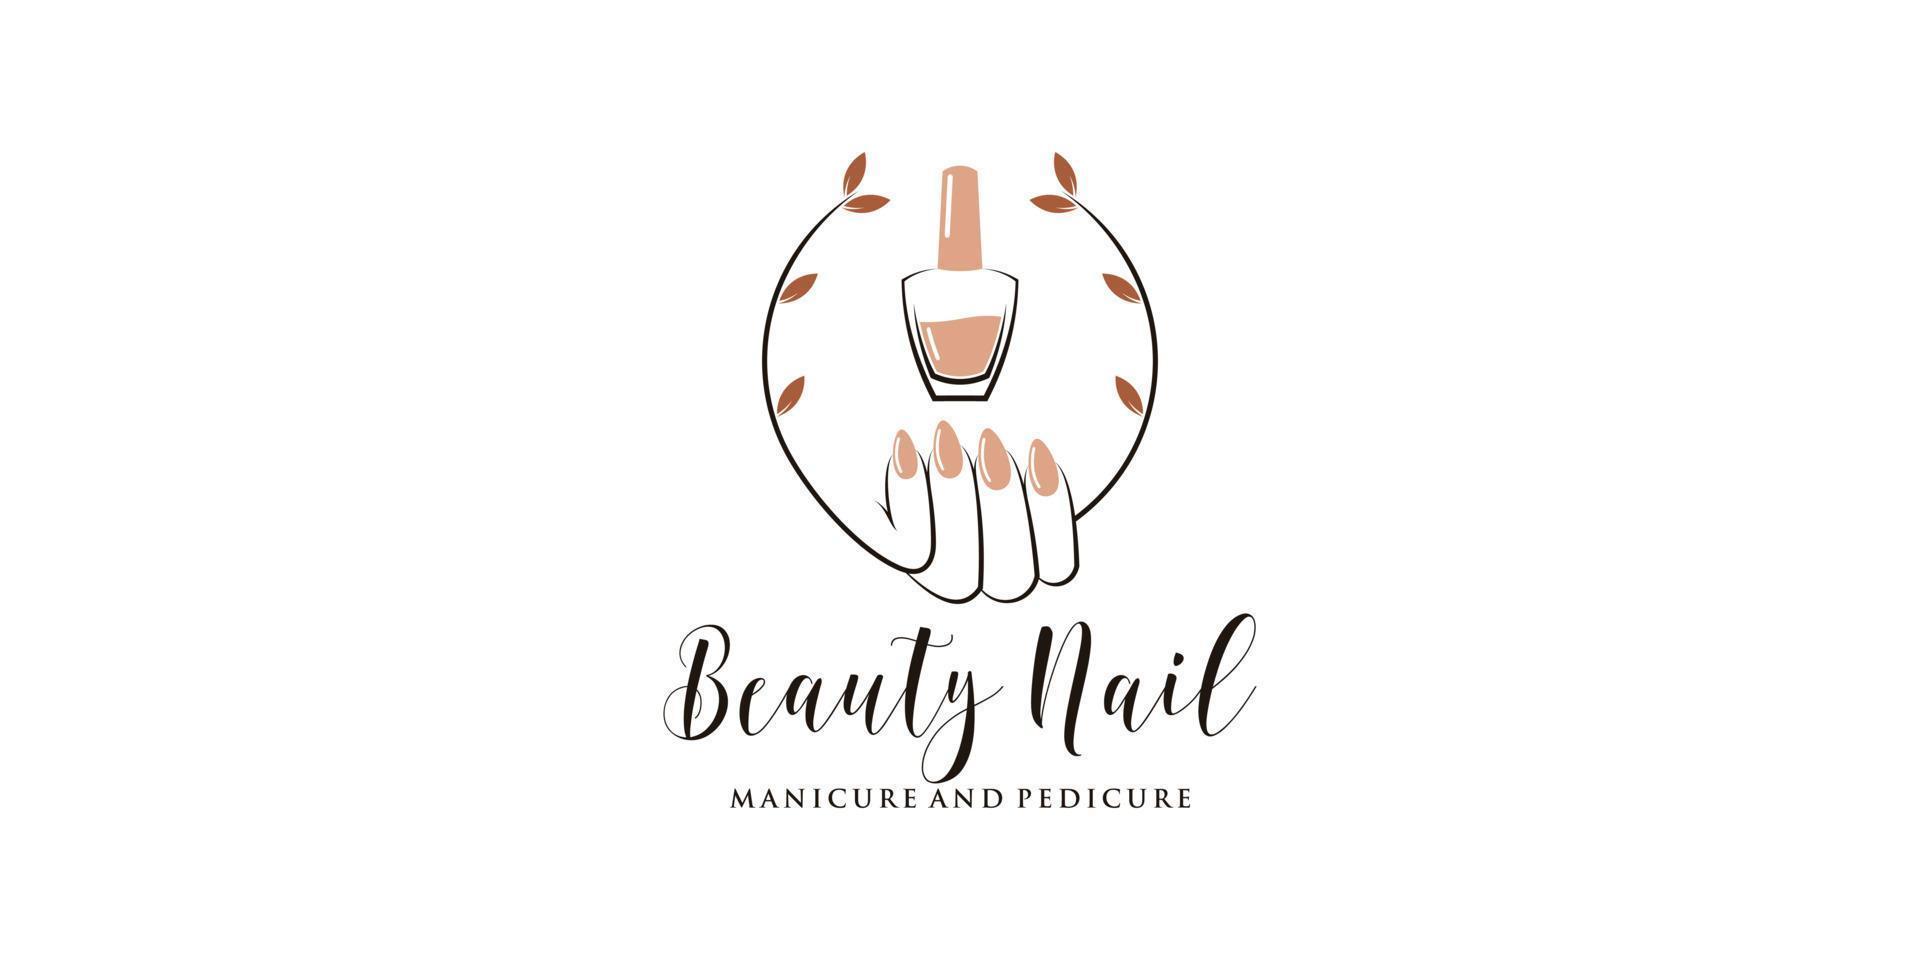 design de logotipo de unhas de beleza para manicure e pedicure com vetor premium de conceito criativo